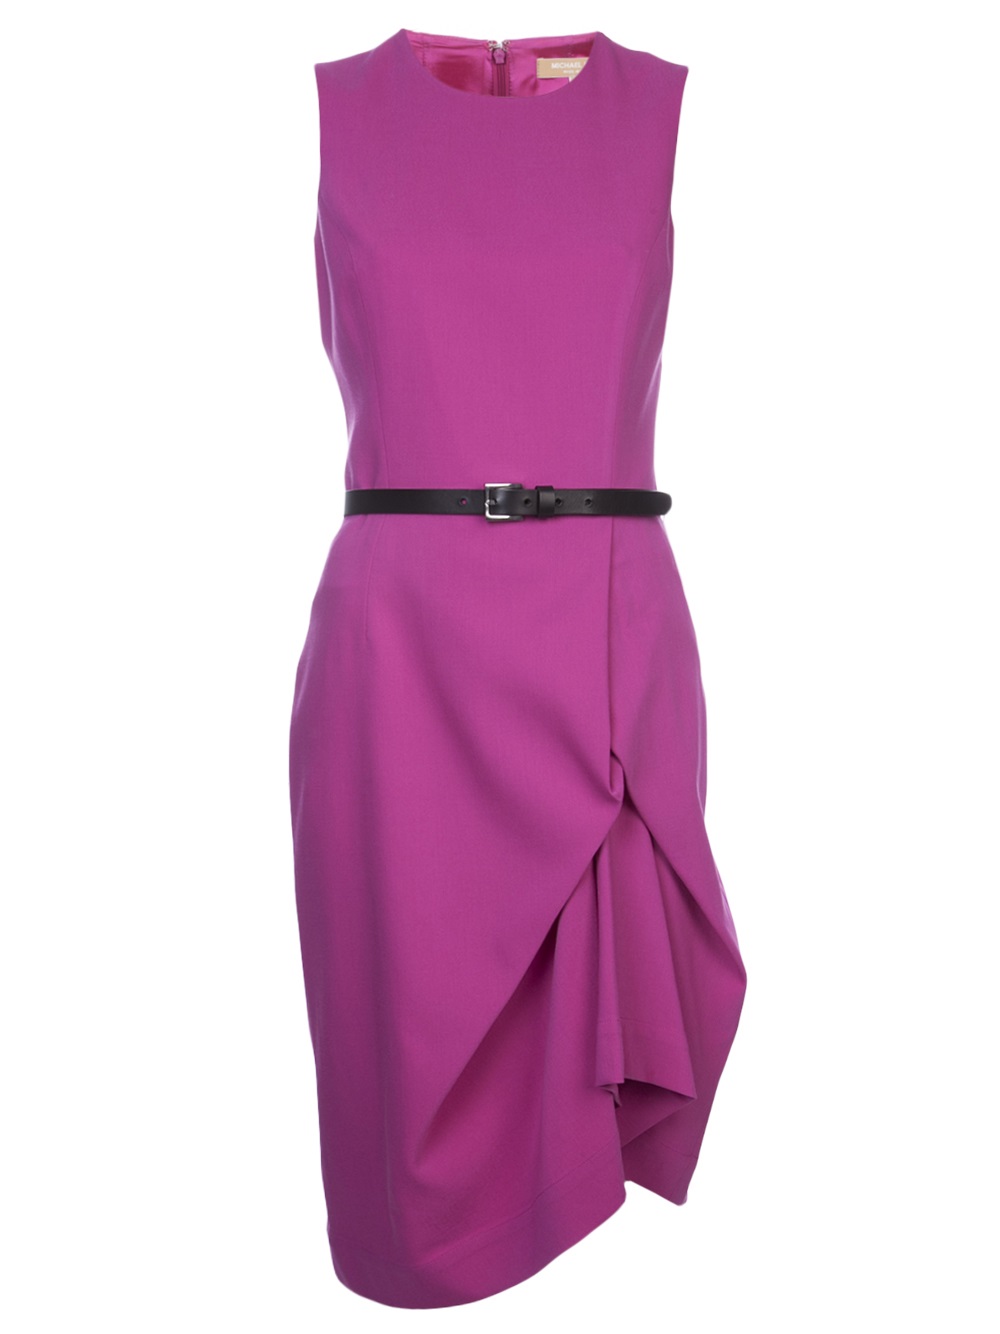 Lyst - Michael Kors Sleeveless Sheath Dress in Pink